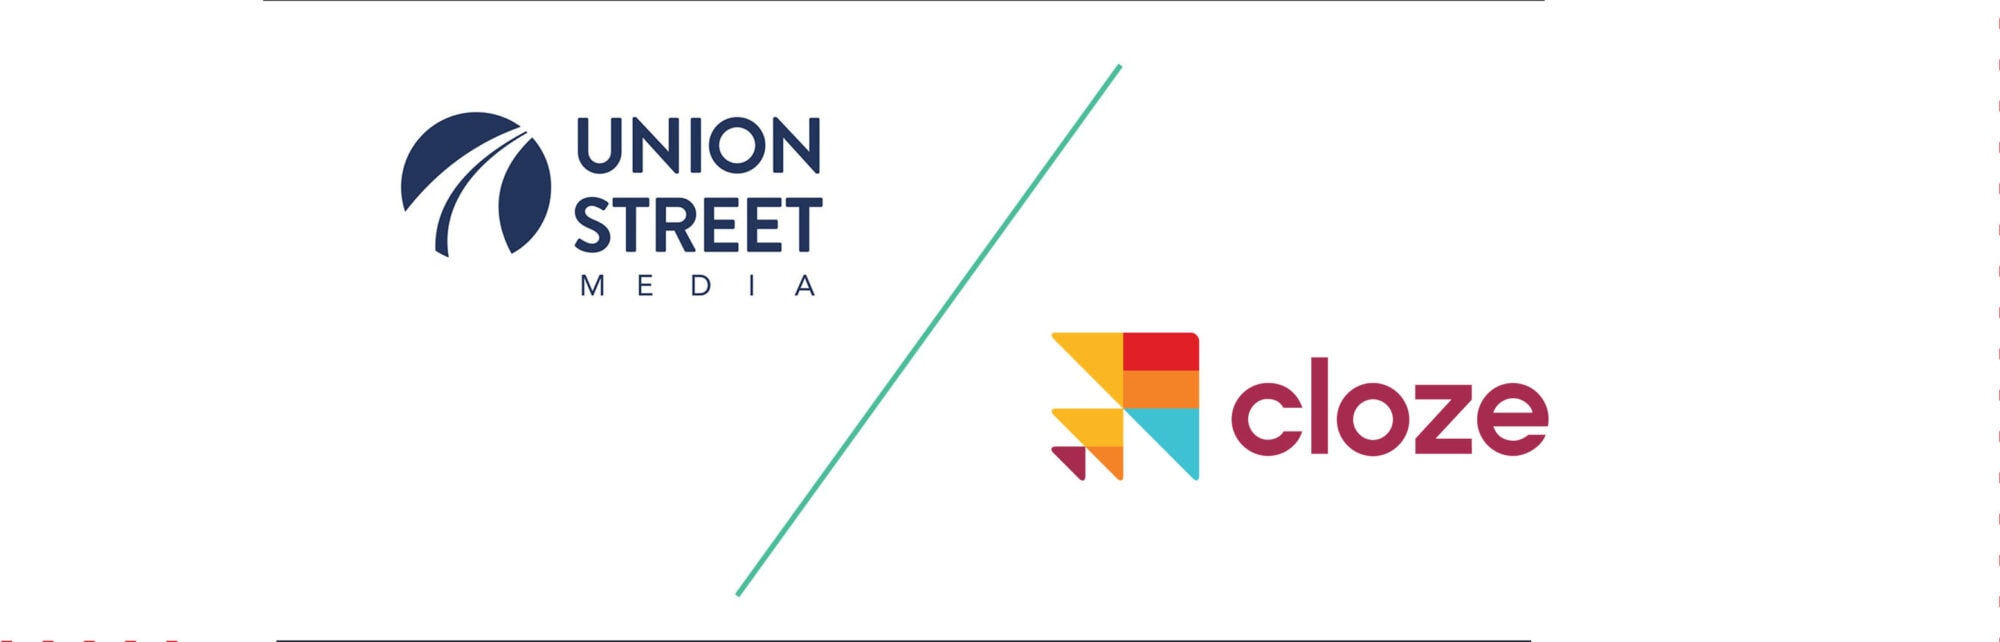 union street media partners with cloze